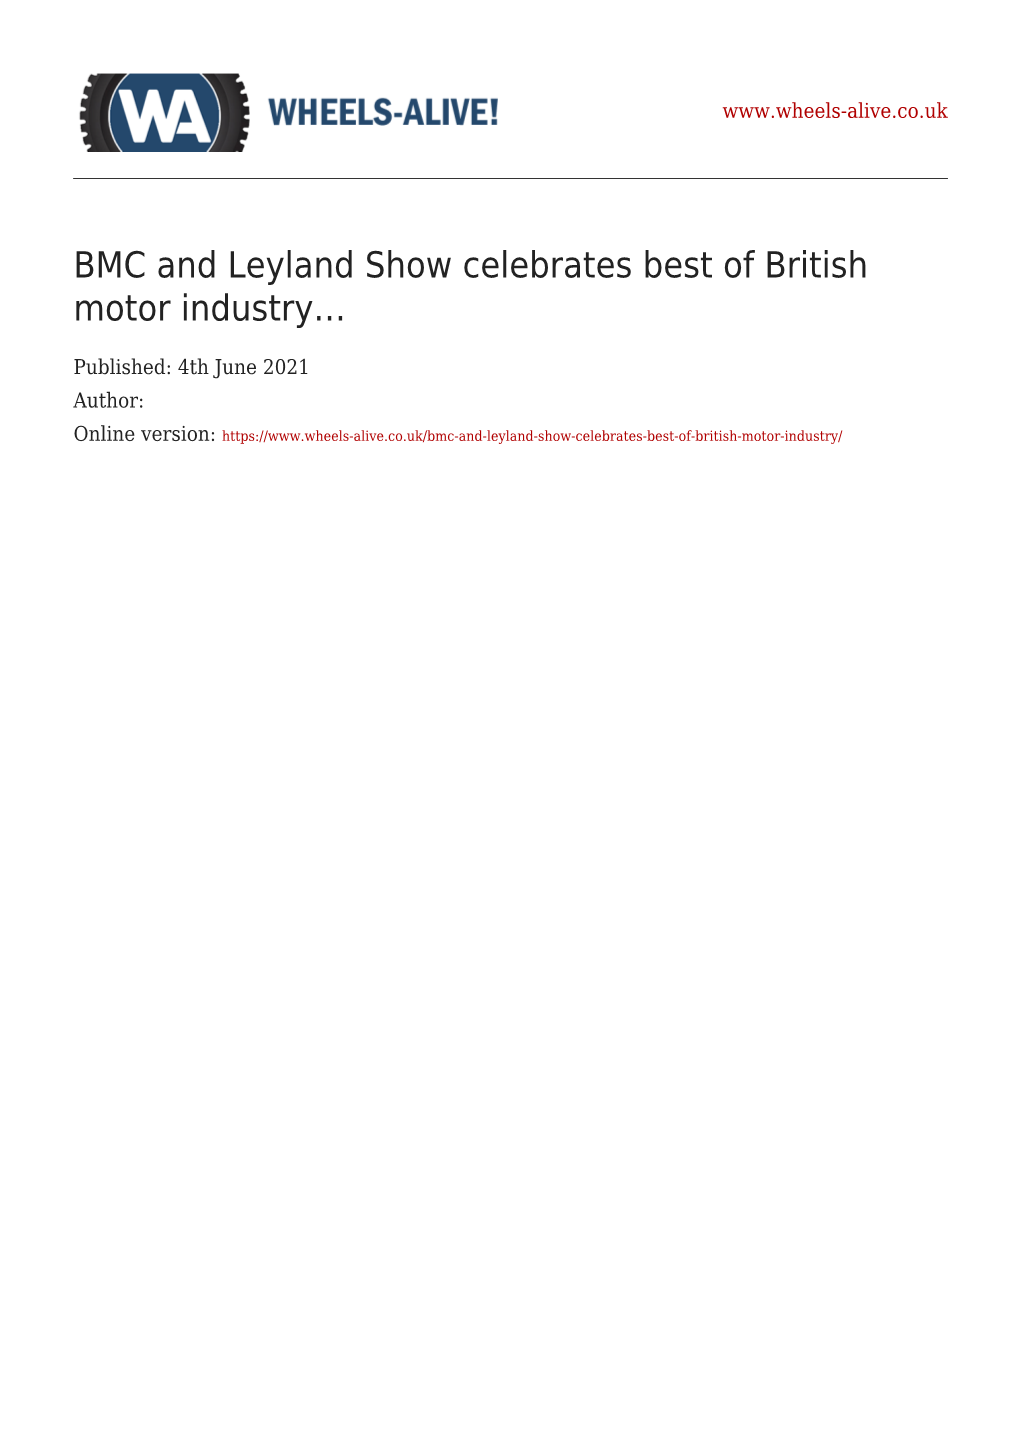 BMC and Leyland Show Celebrates Best of British Motor Industry…